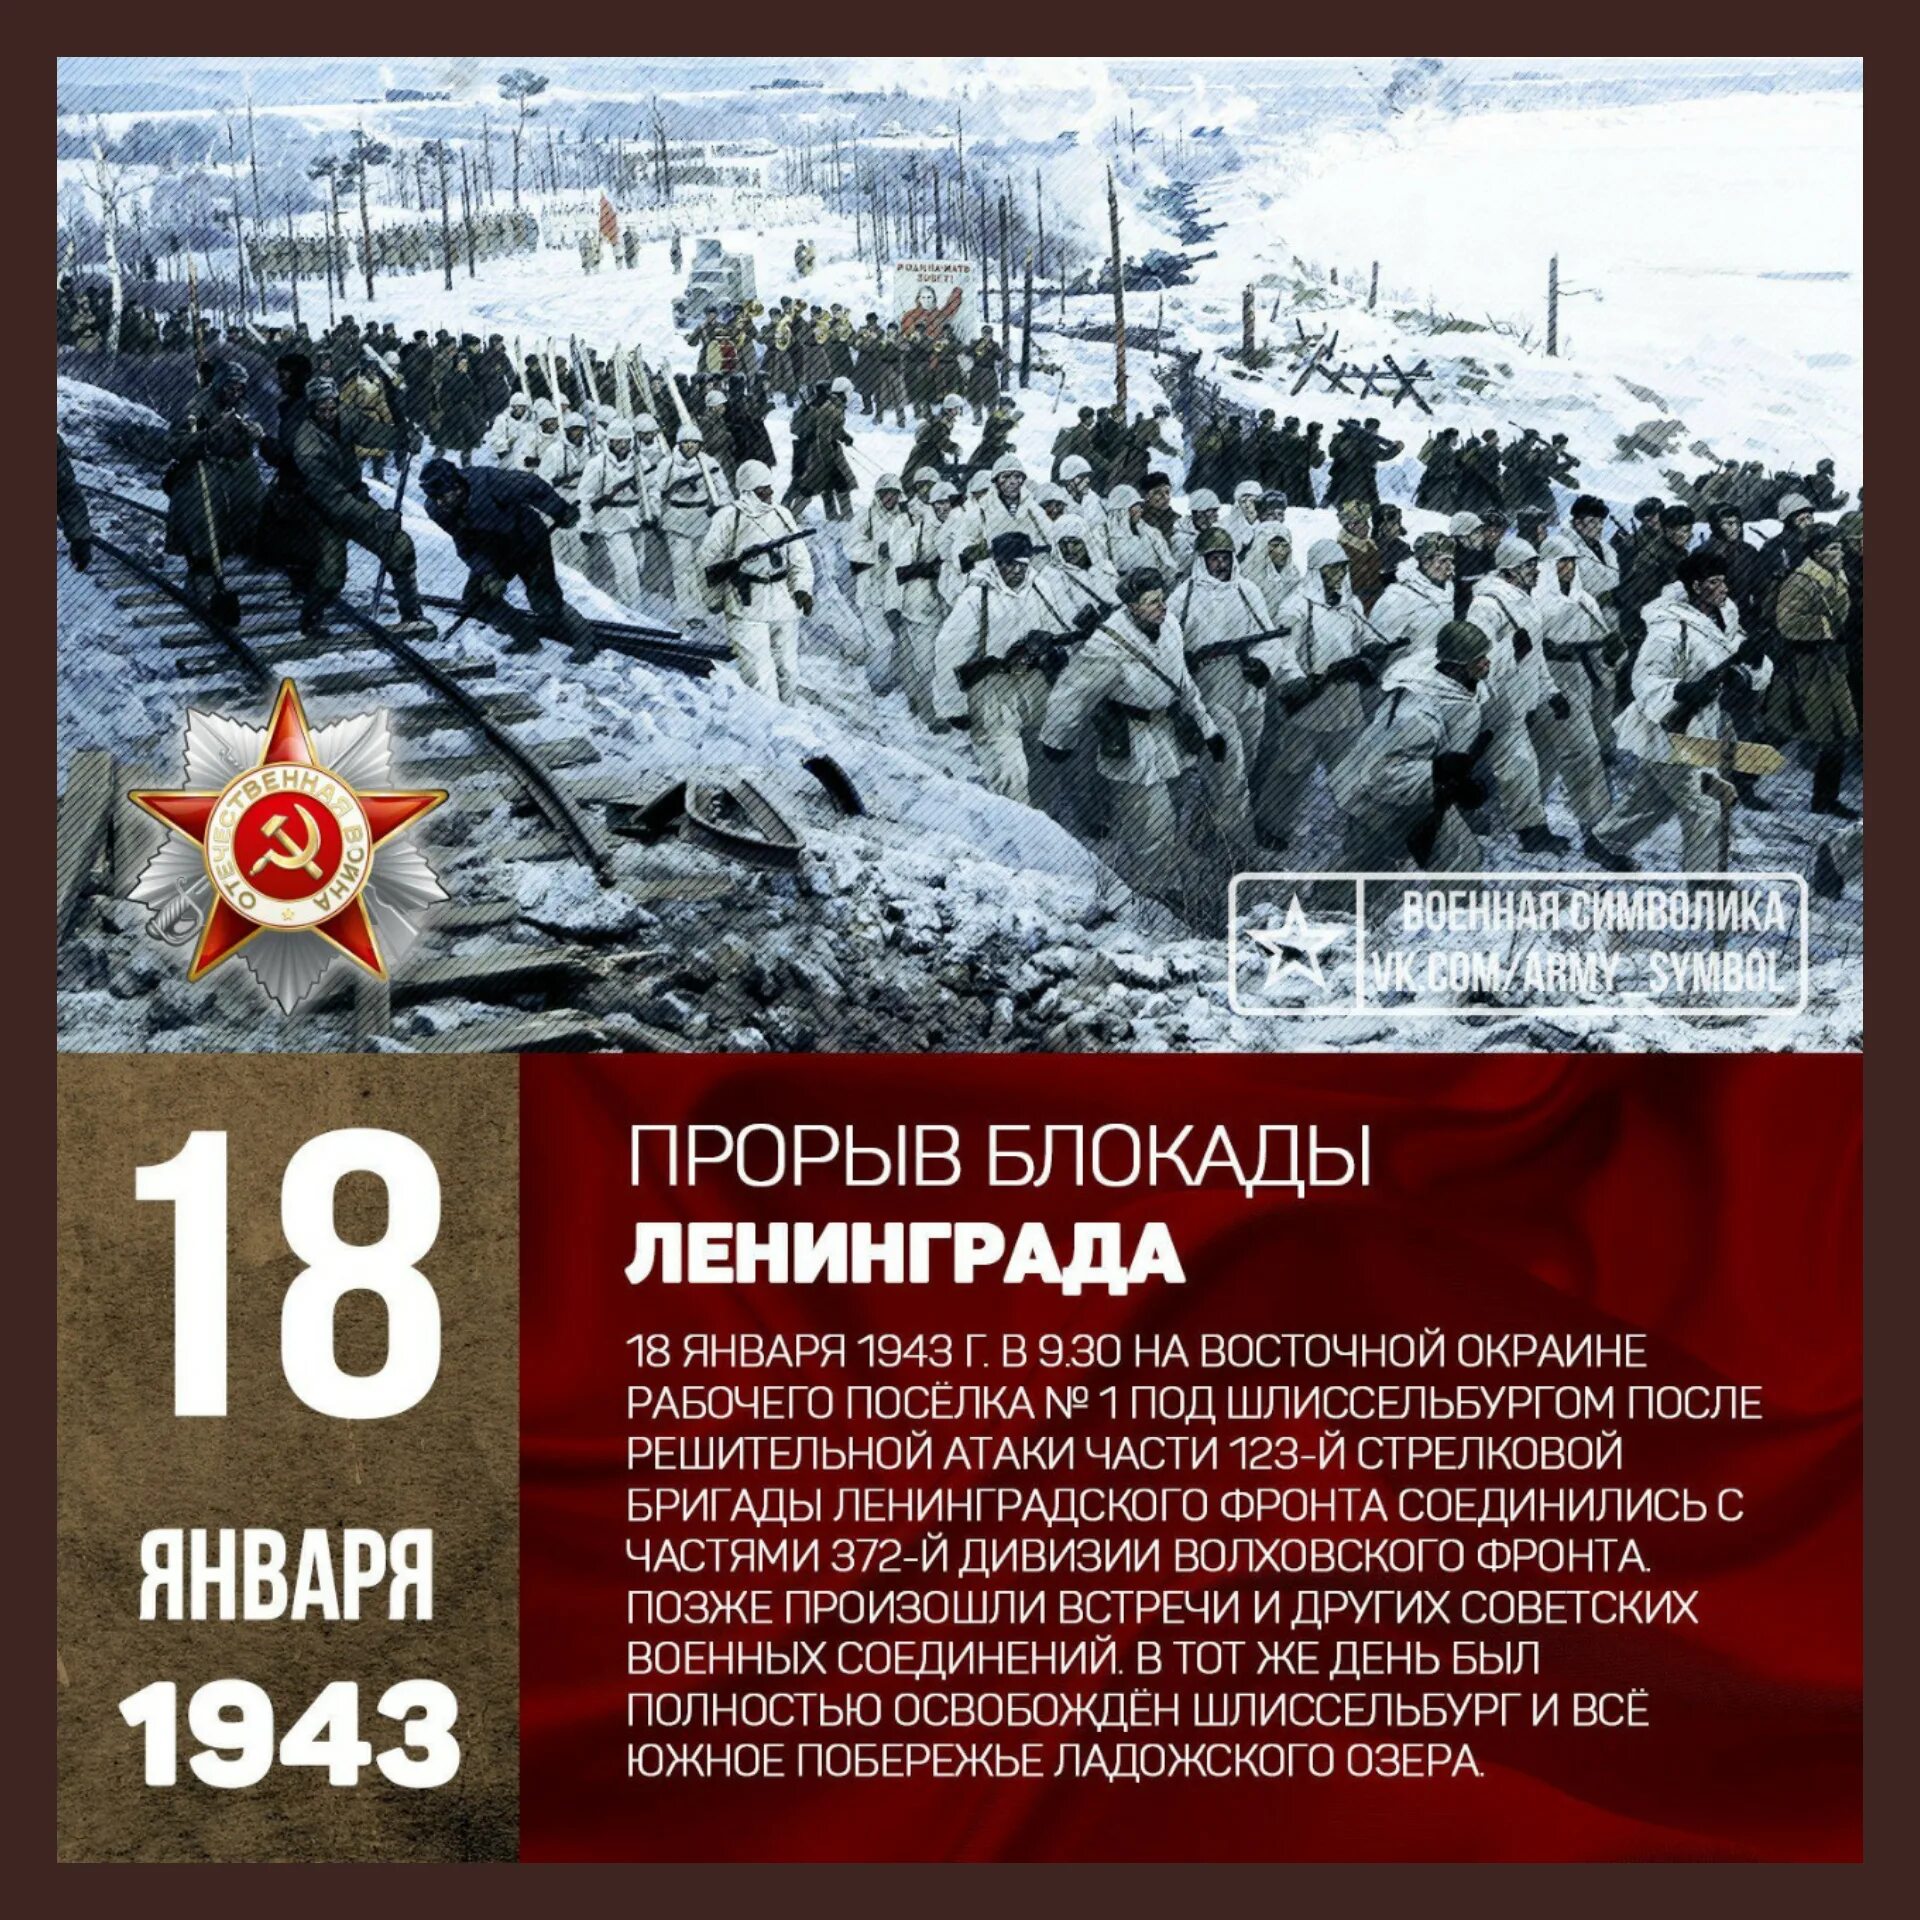 18 Января 1943 прорвана блокада. 80 Лет прорыву блокады Ленинграда 1943. Первый прорыв блокады Ленинграда в 1943 году. В каком году прорвали блокаду